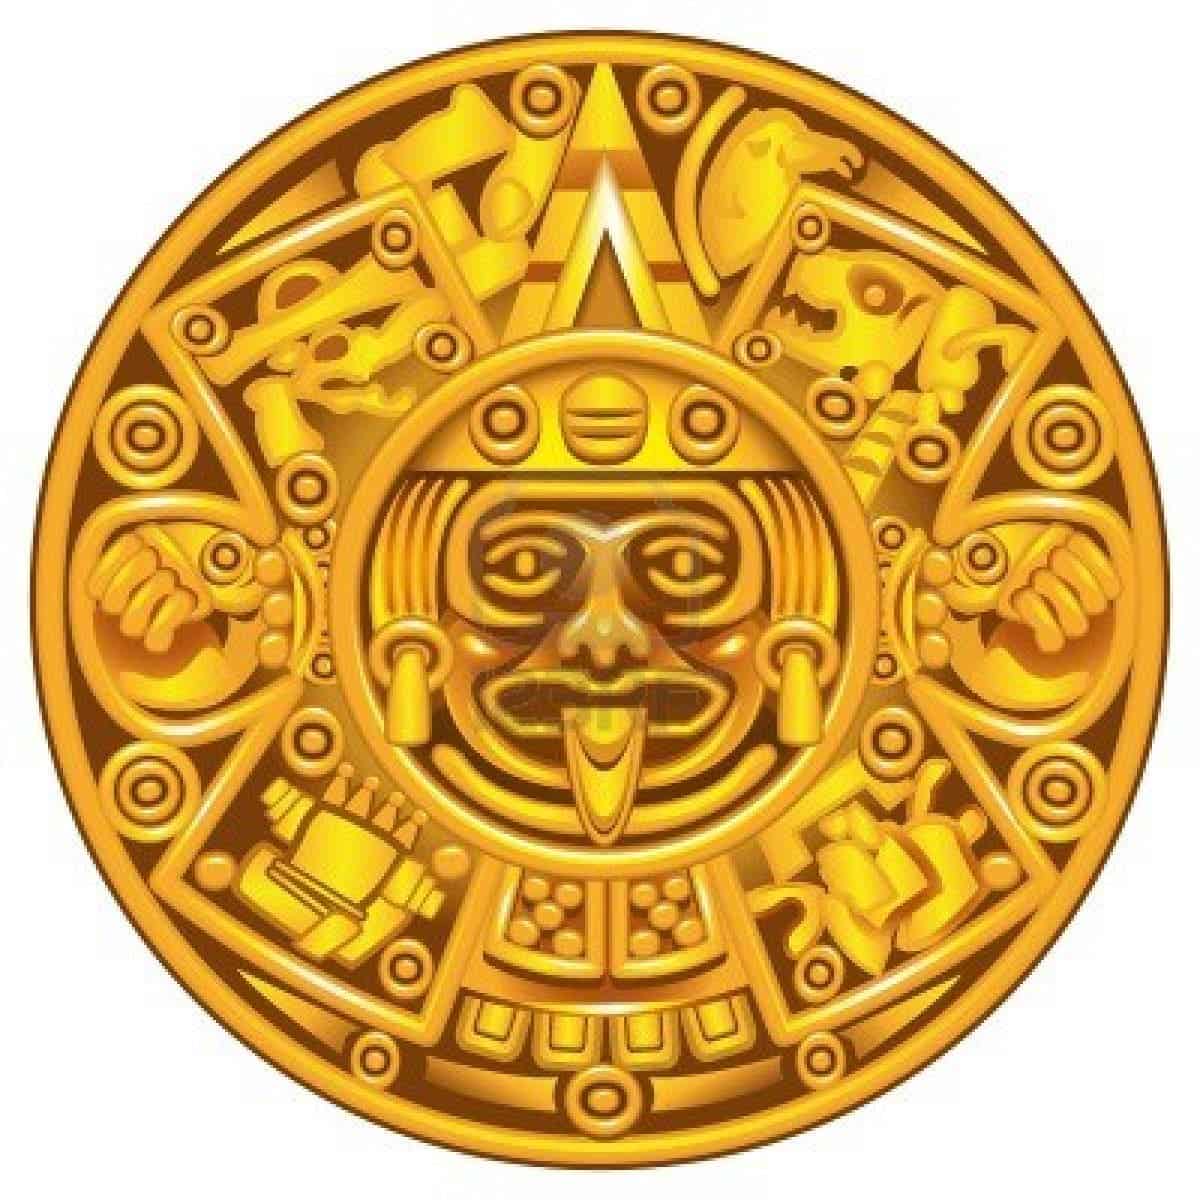 Mayan prophecy 21 December debunking Maya calendar predict end of world